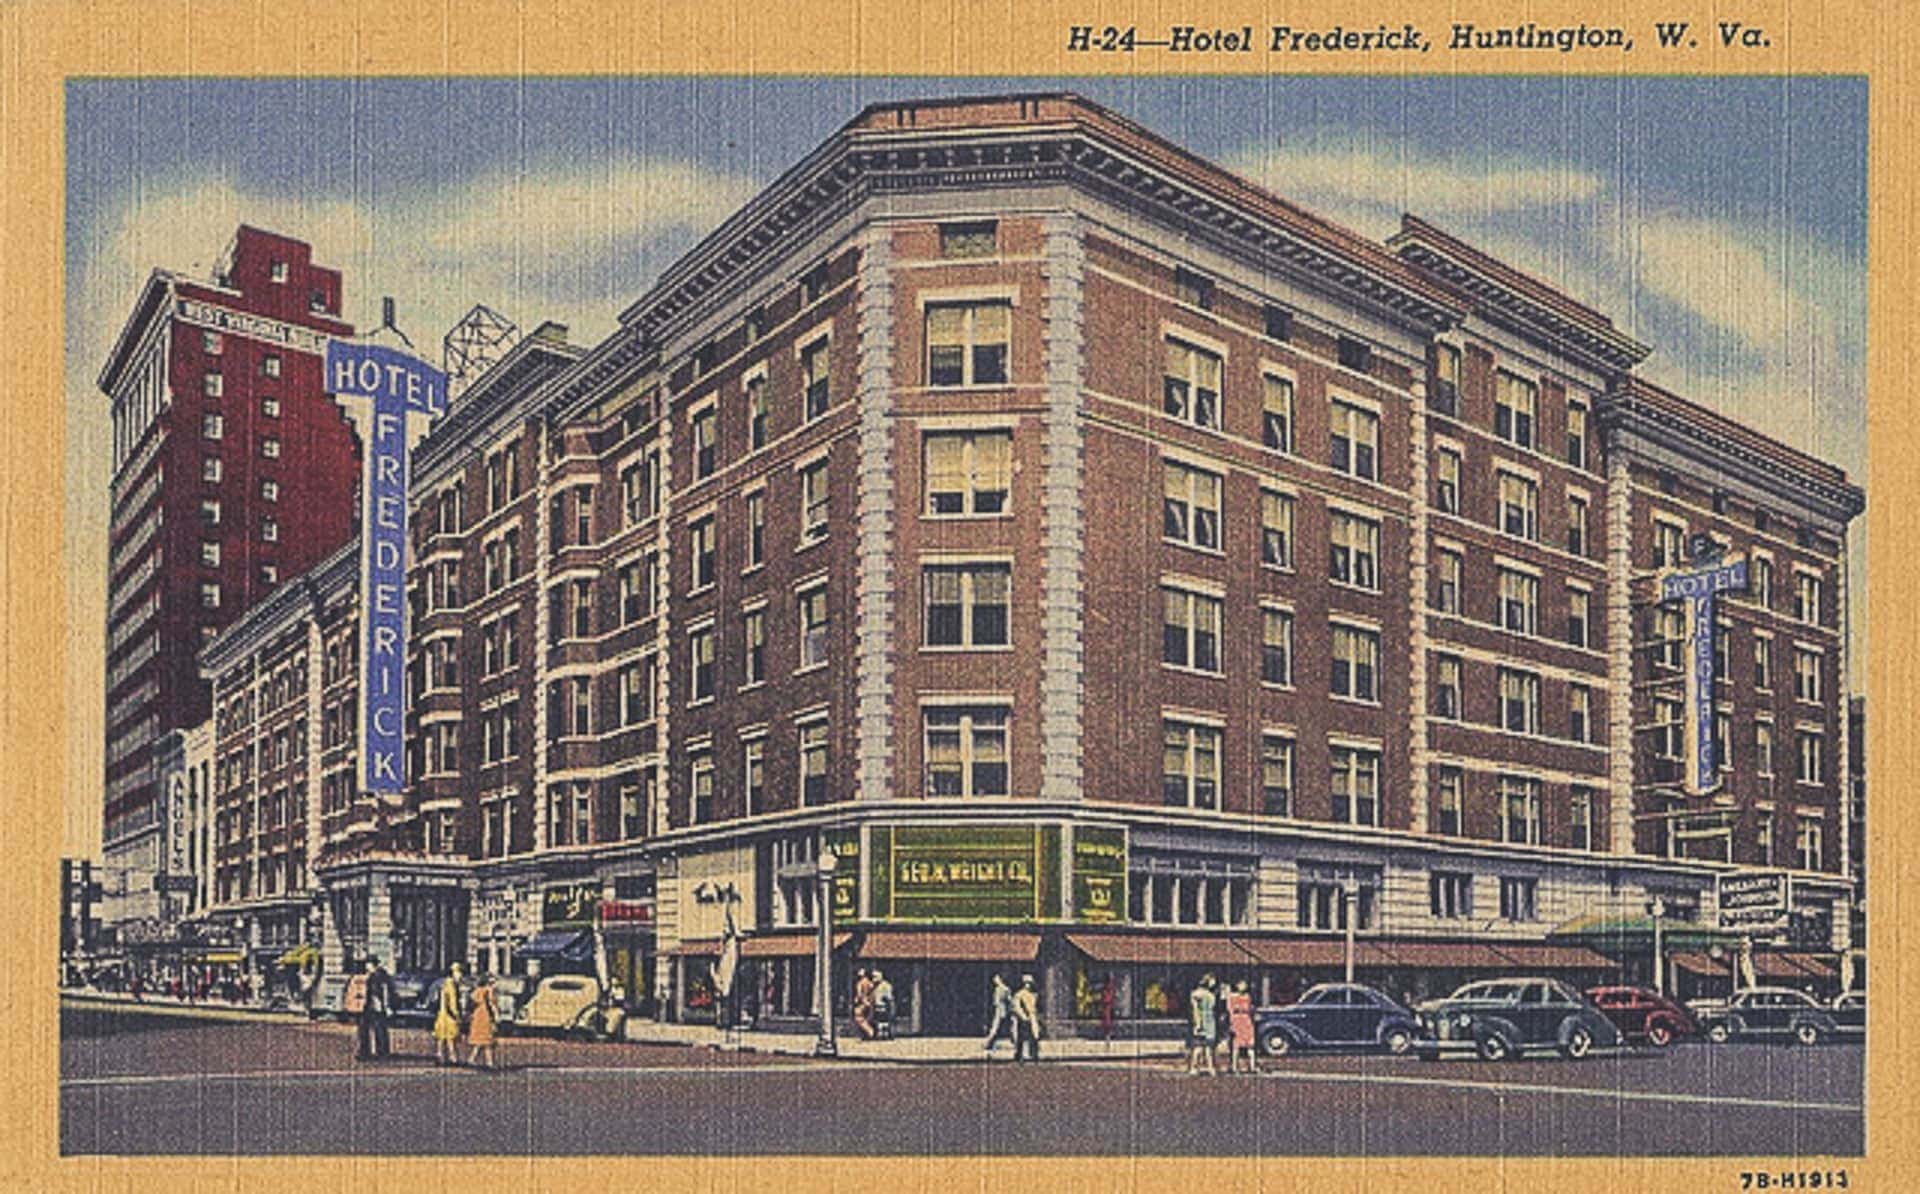 Hotel Frederick postcard